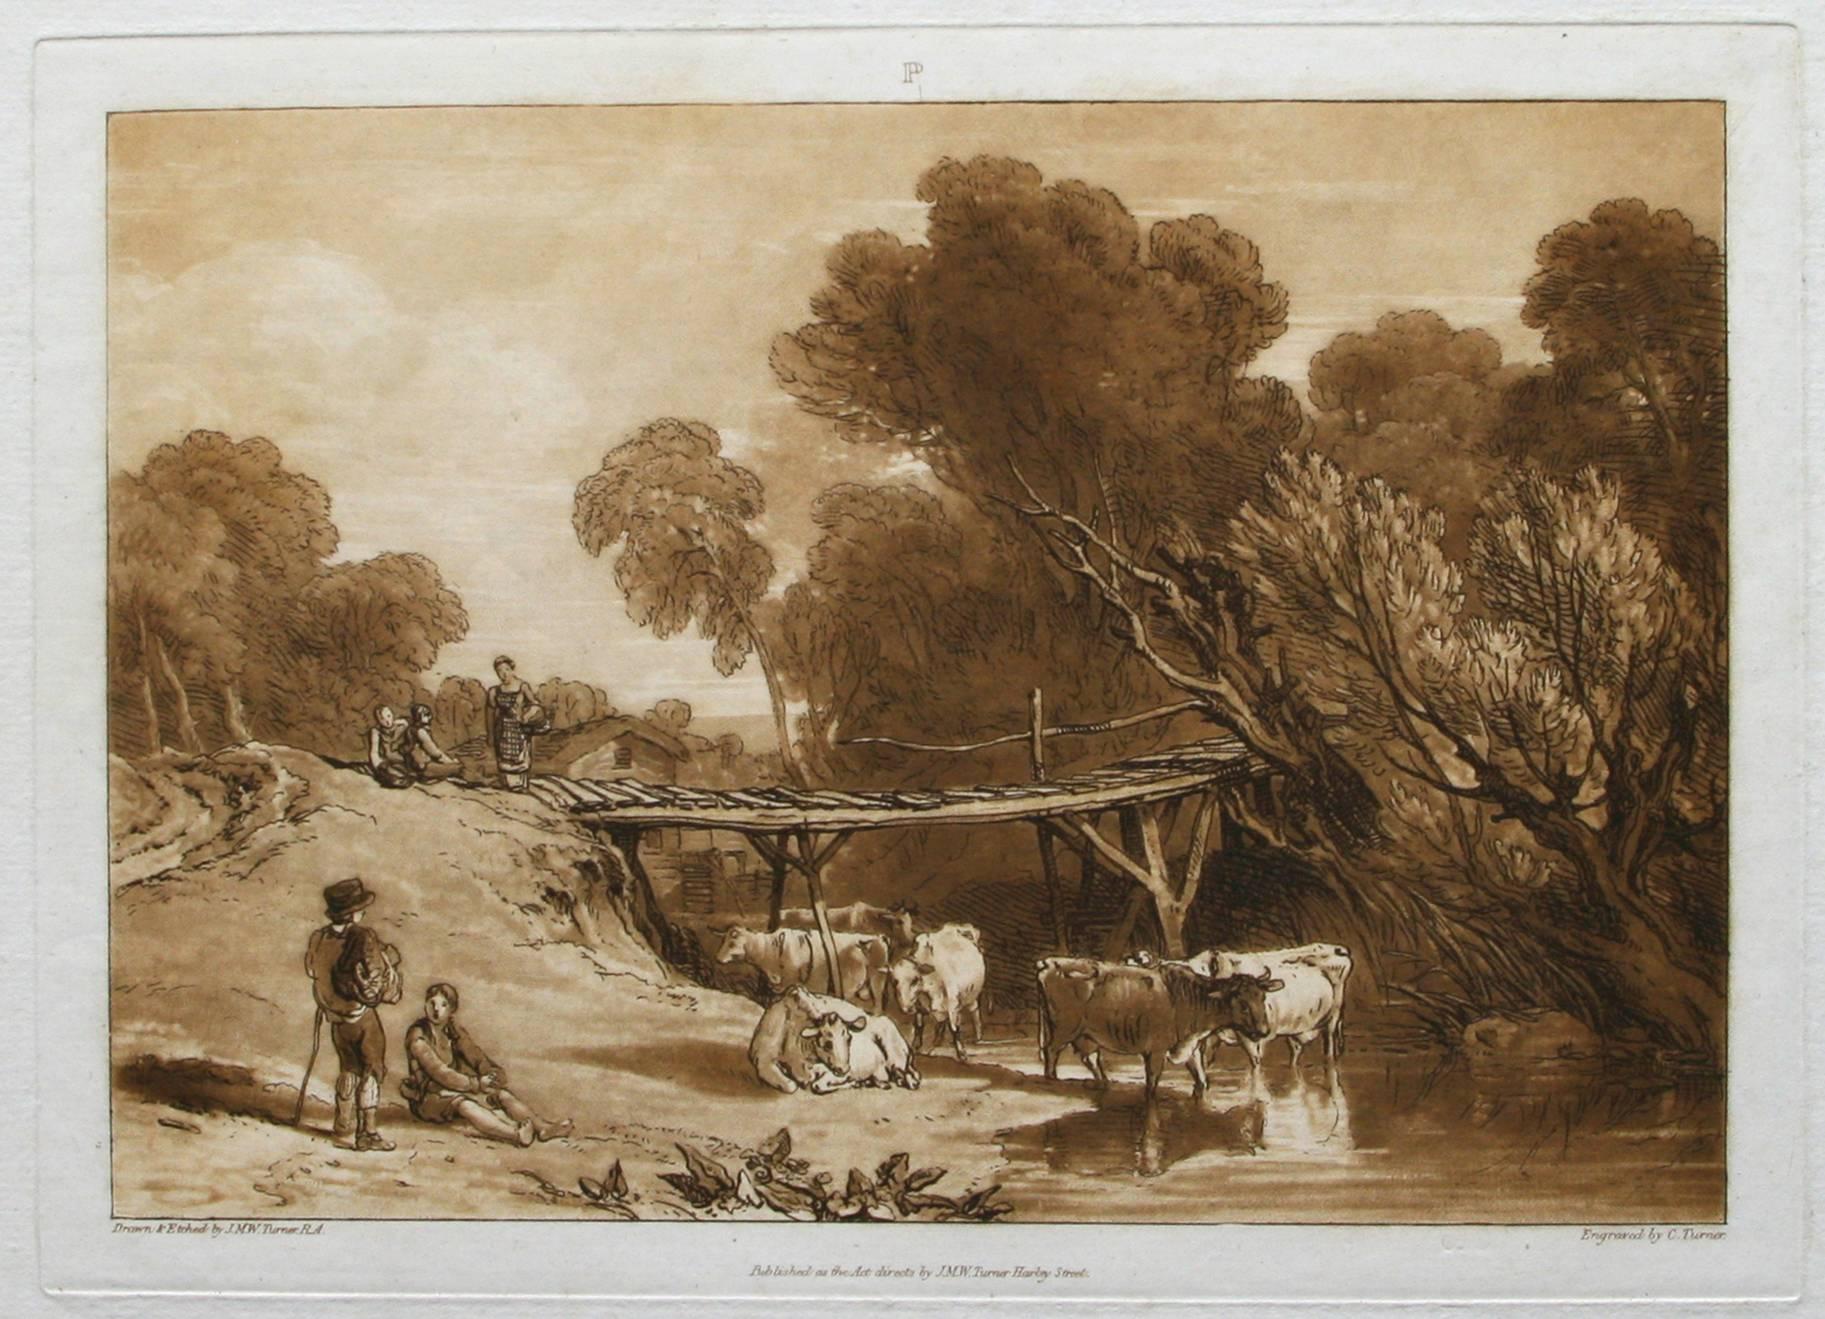 Bridge and Cows. - Print by J.M.W. Turner